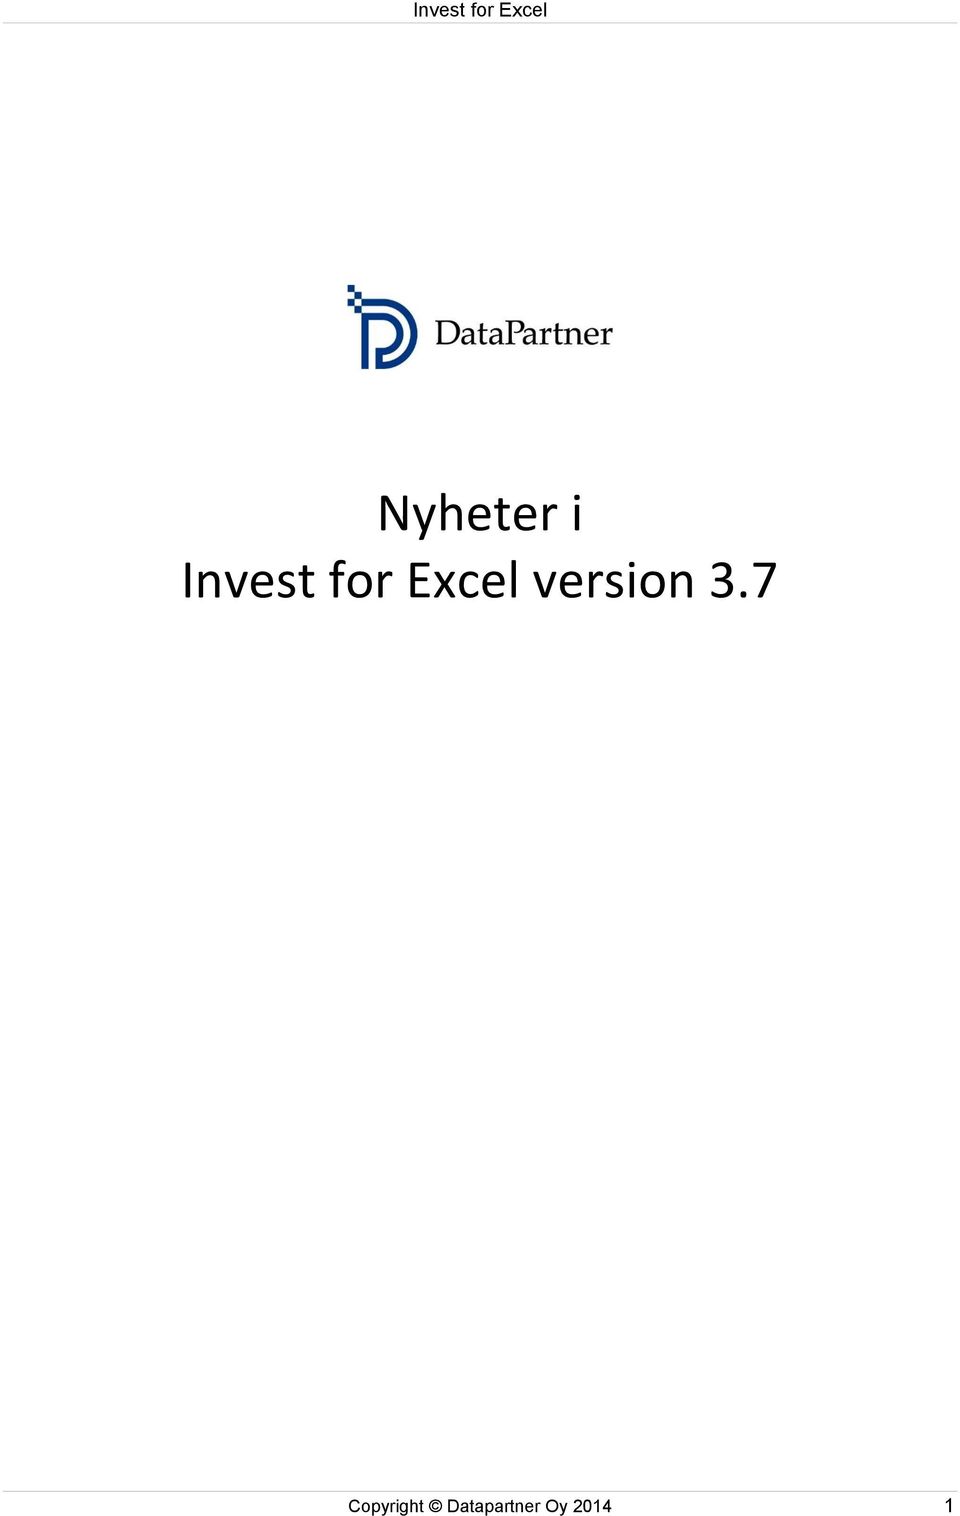 Nyheter i Invest for Excel version PDF Free Download